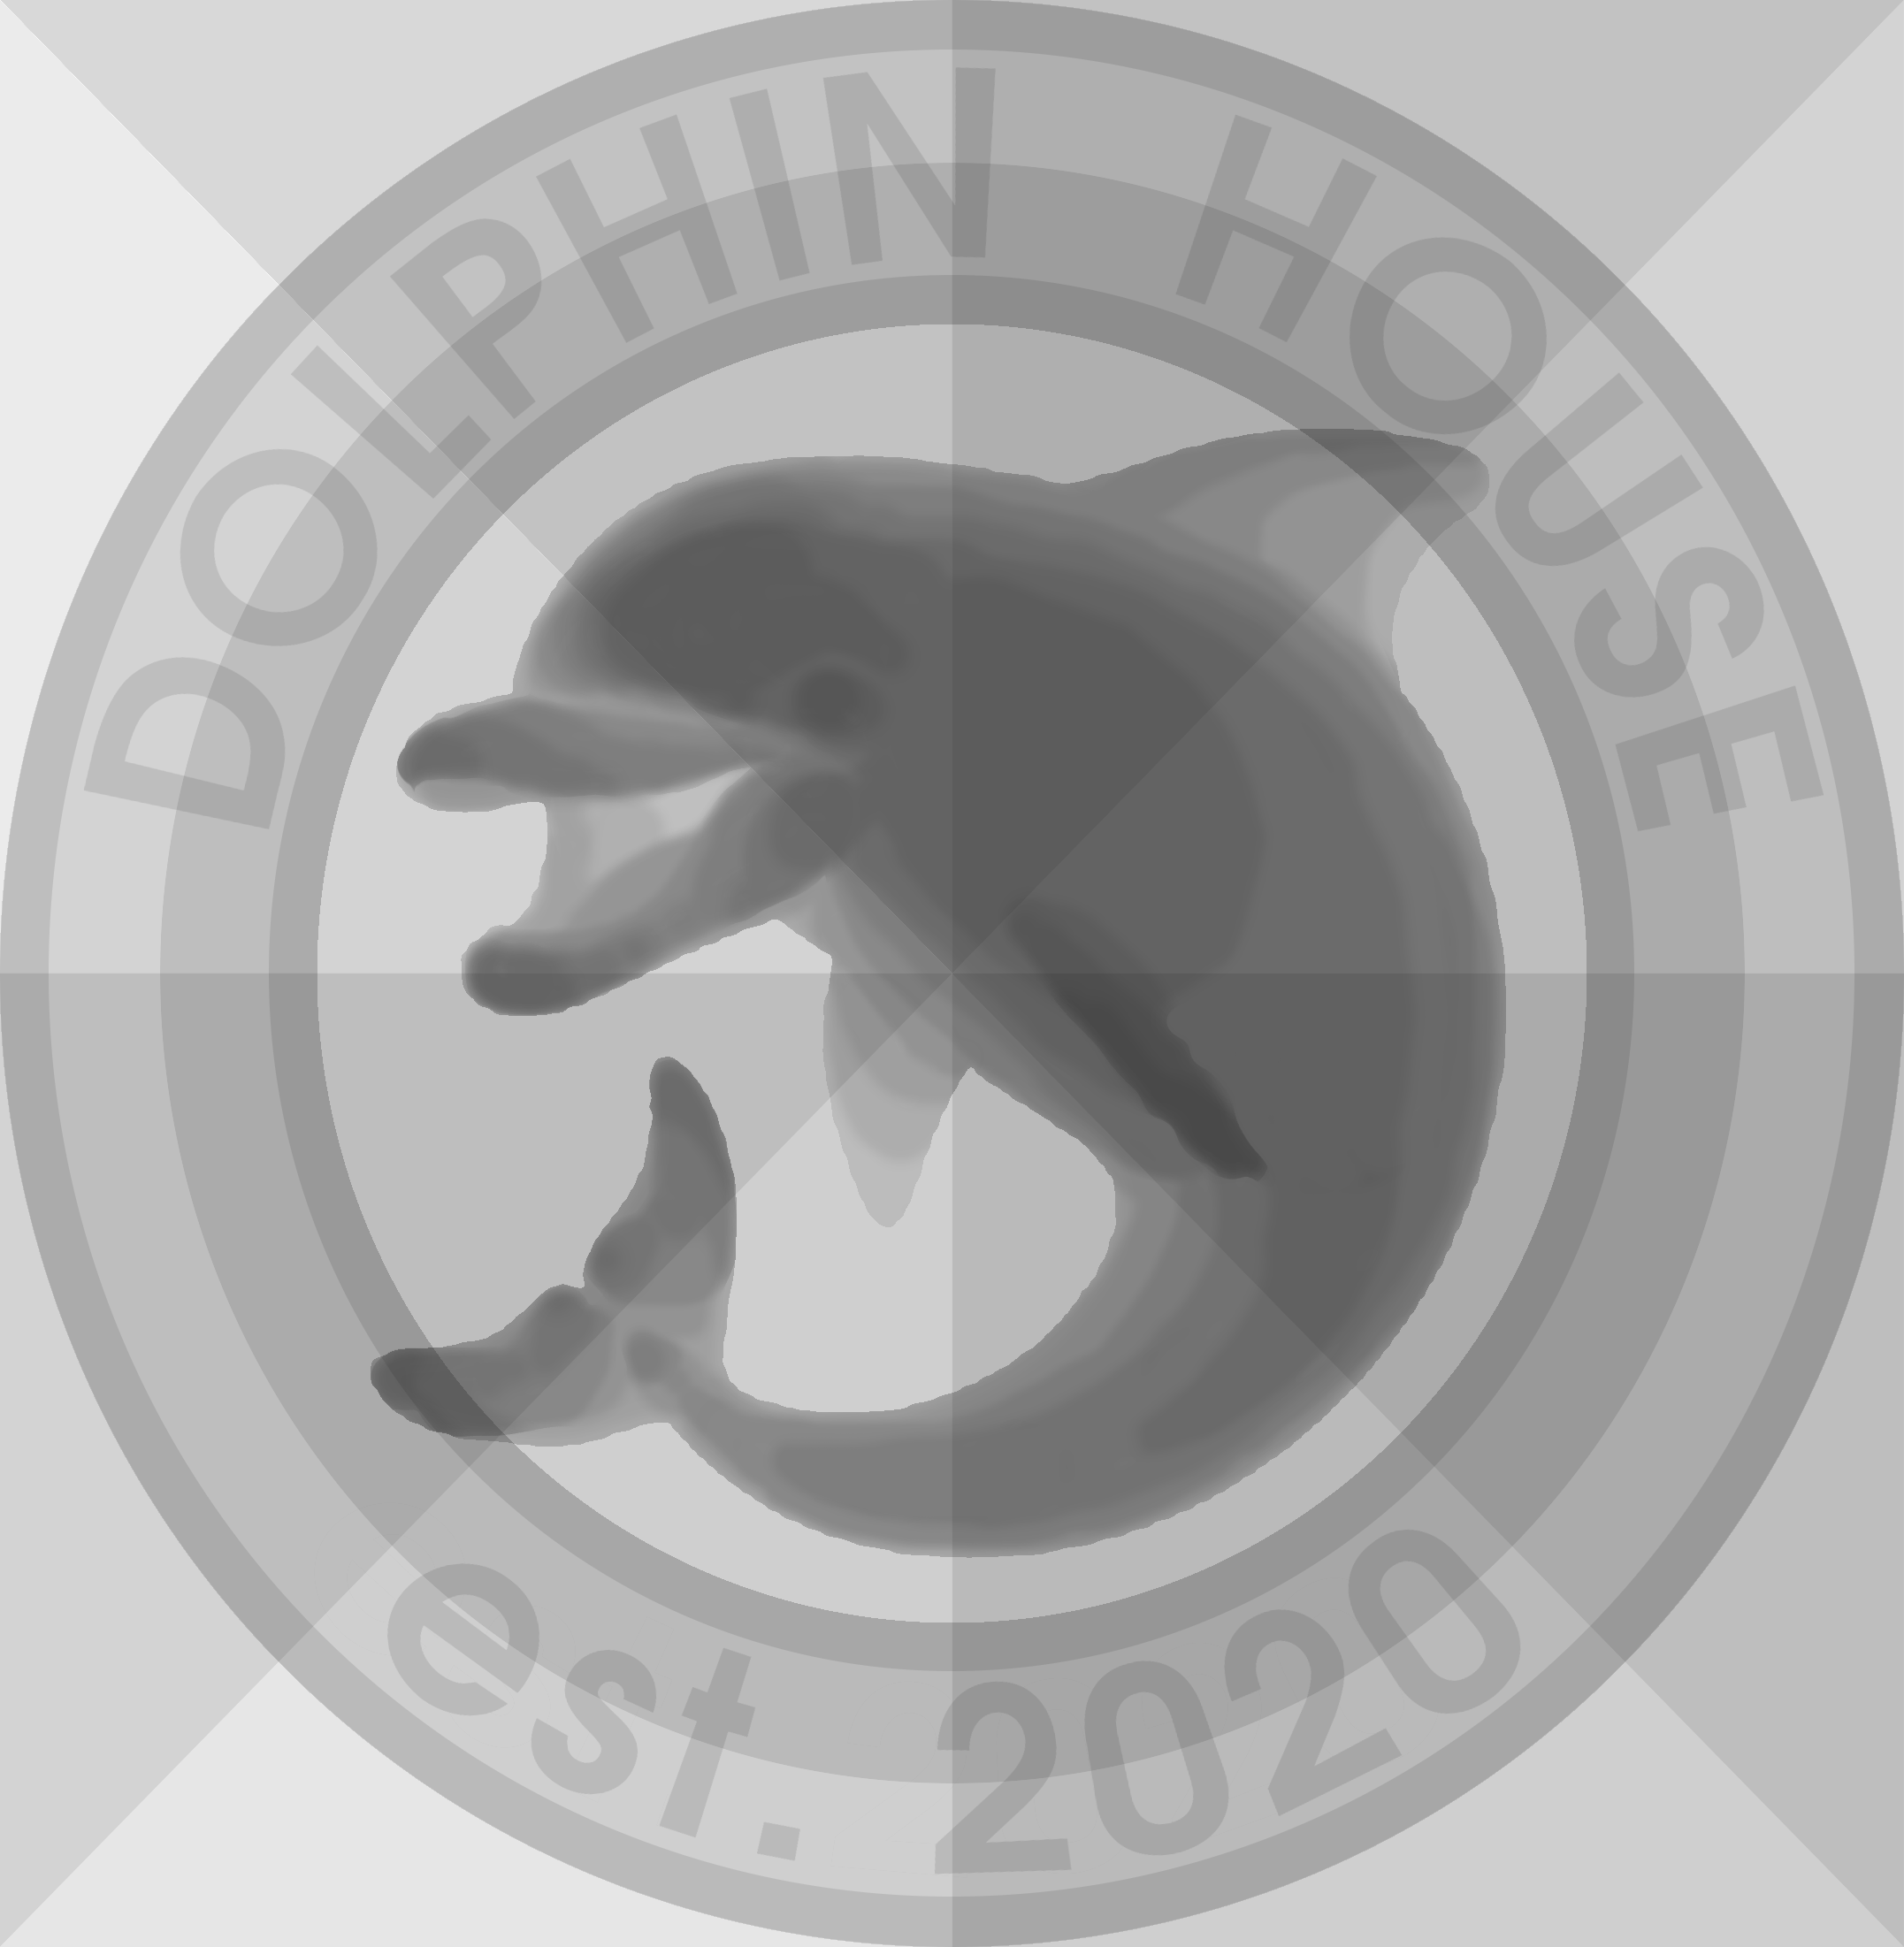 work in progress dolphin seal